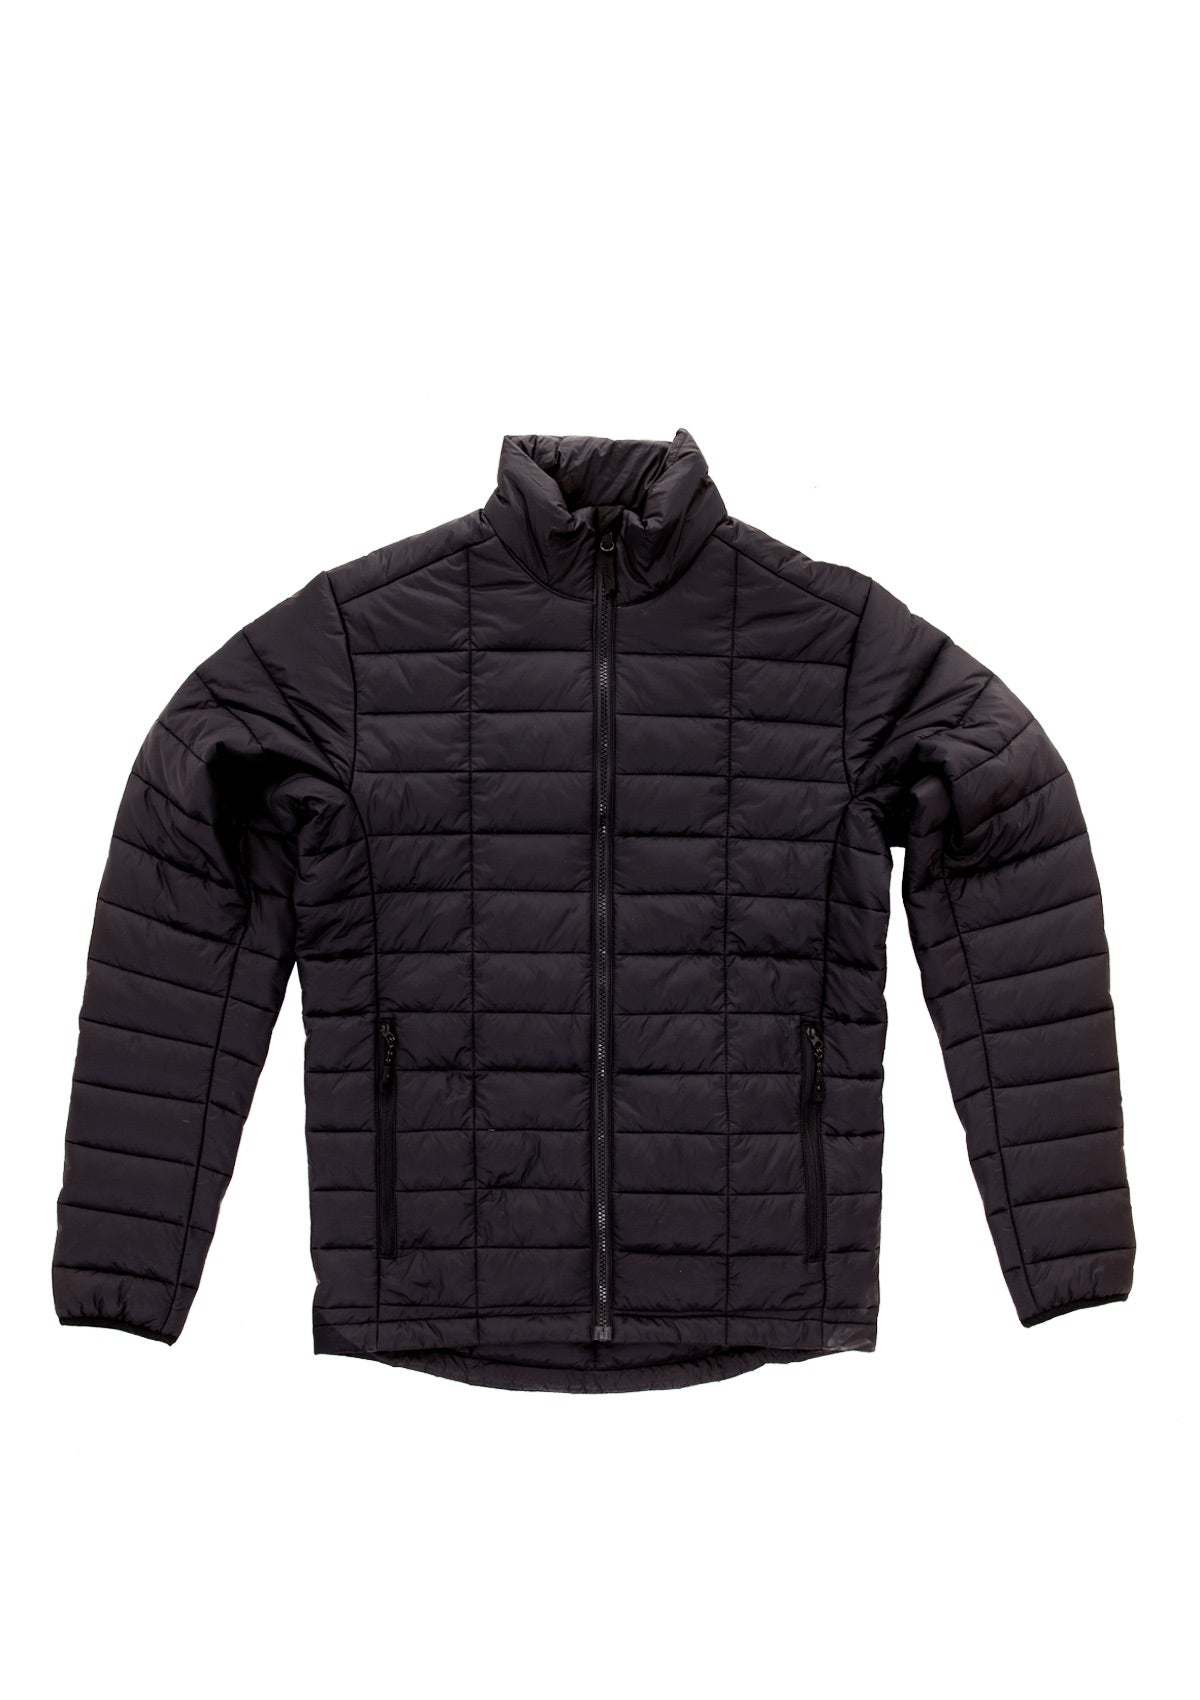 needessentials insulator jacket black adventure snow jacket non branded